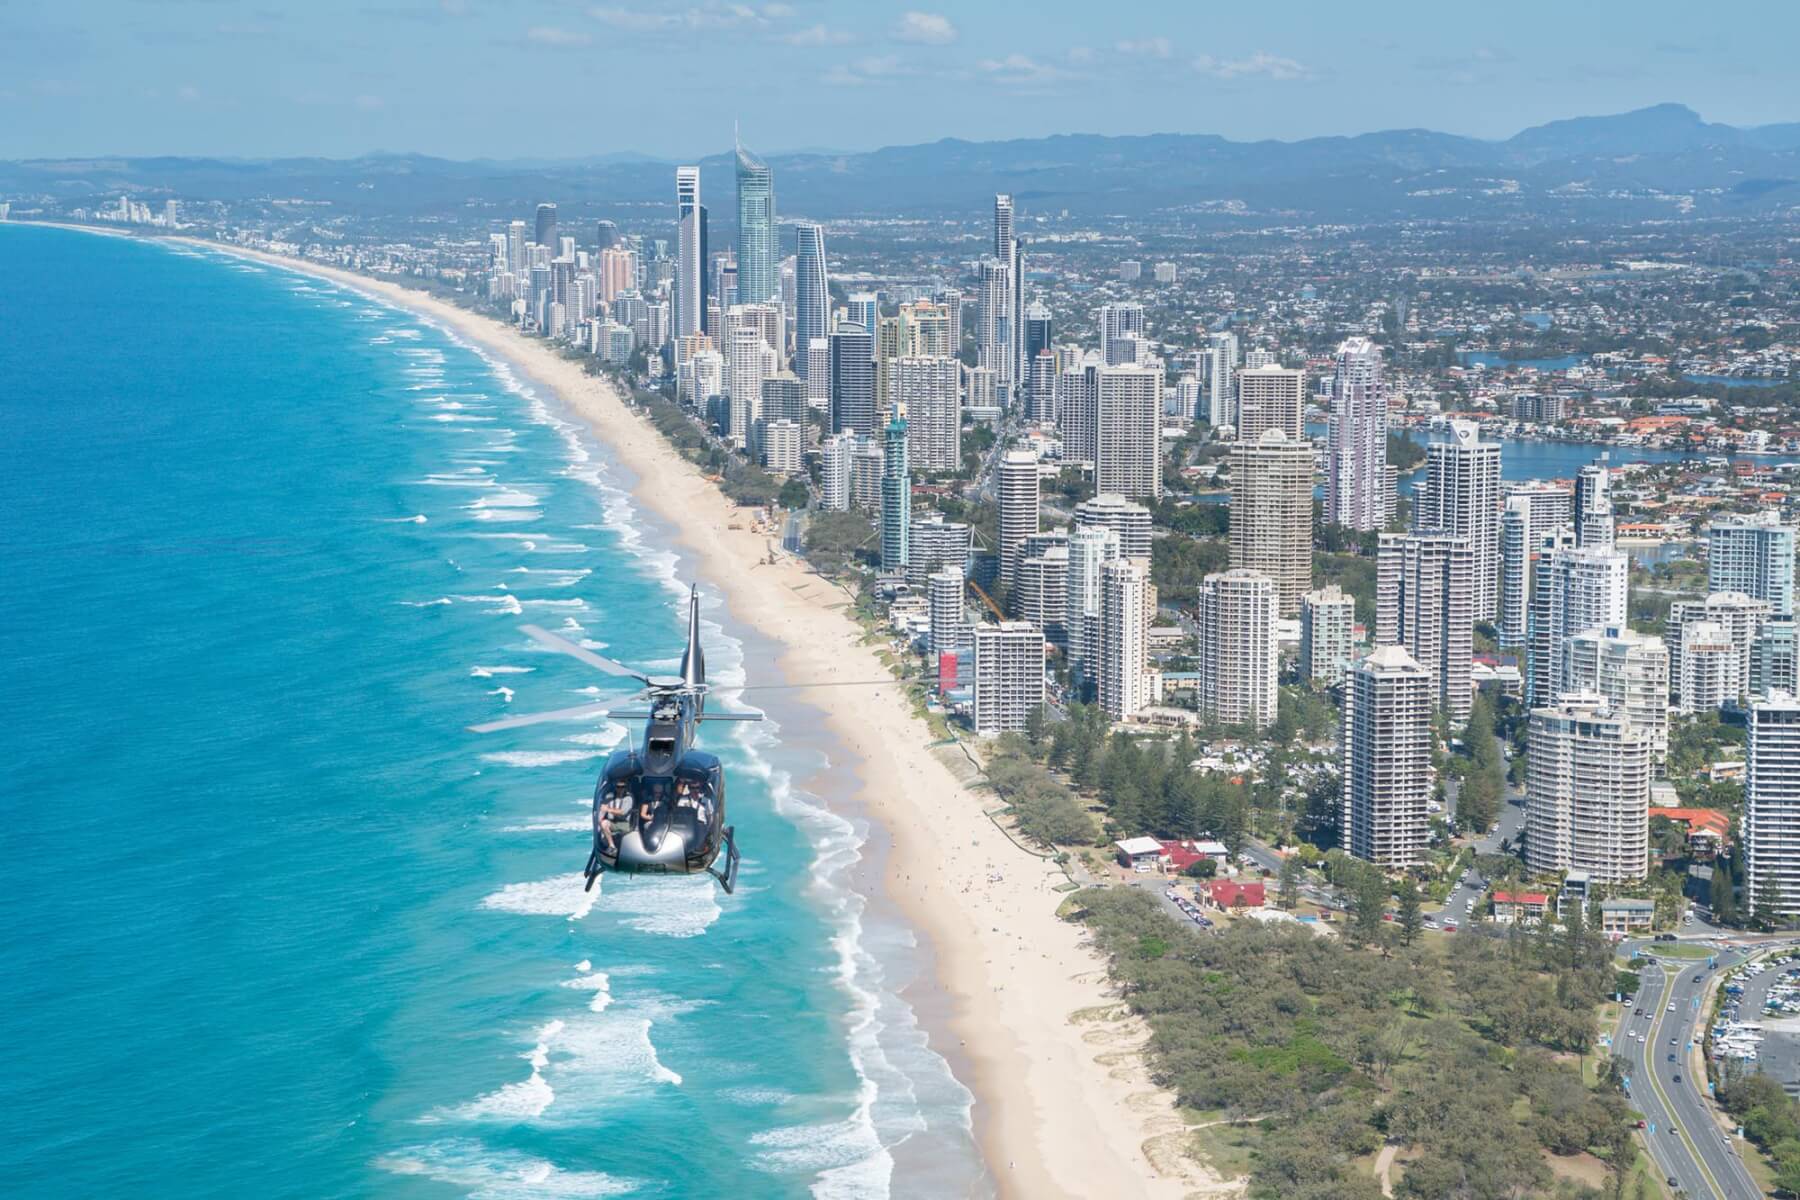 Surfers Paradise🏄‍♂️ Gold Coast, Australia 🇦🇺 - by drone [4K